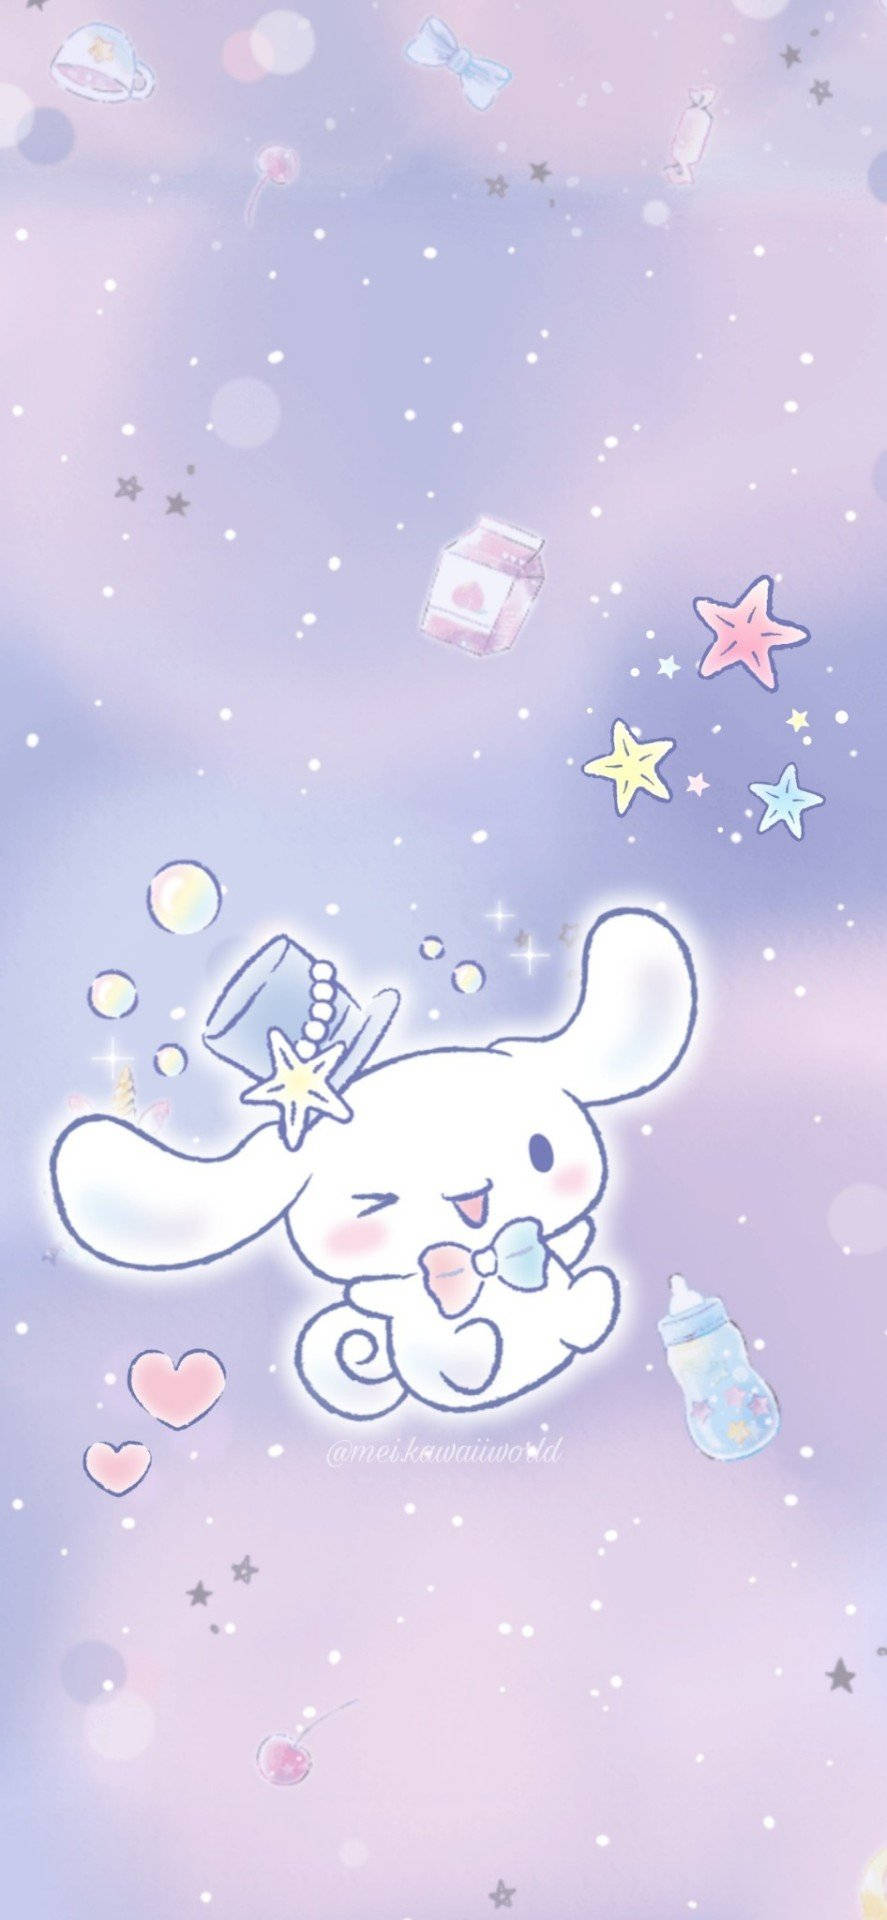  Be Positive   Hello kitty wallpaper hd Wallpaper iphone cute Sanrio  wallpaper